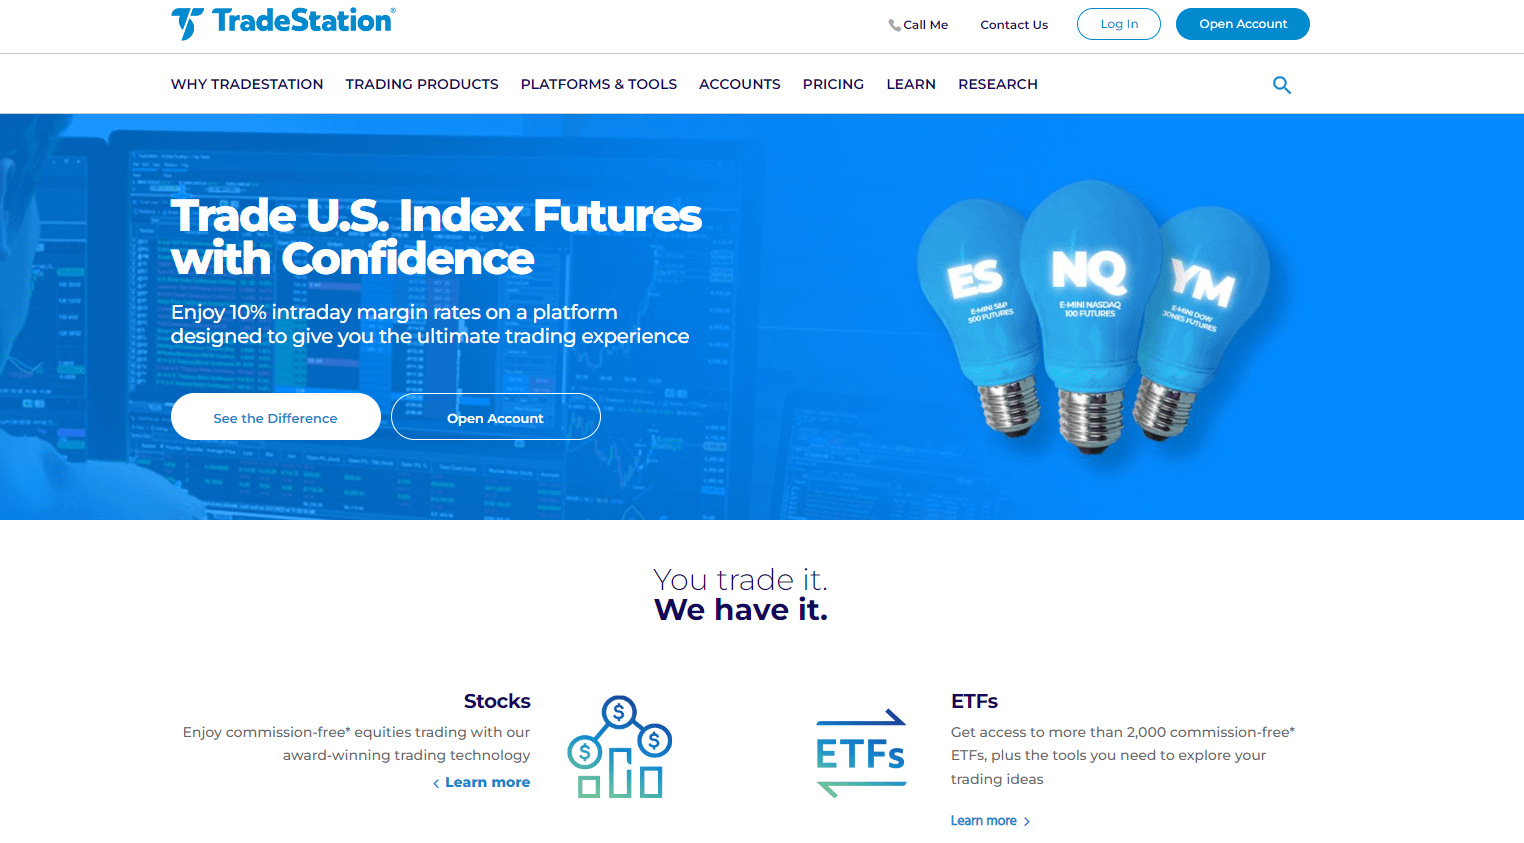 TradeStation homepage